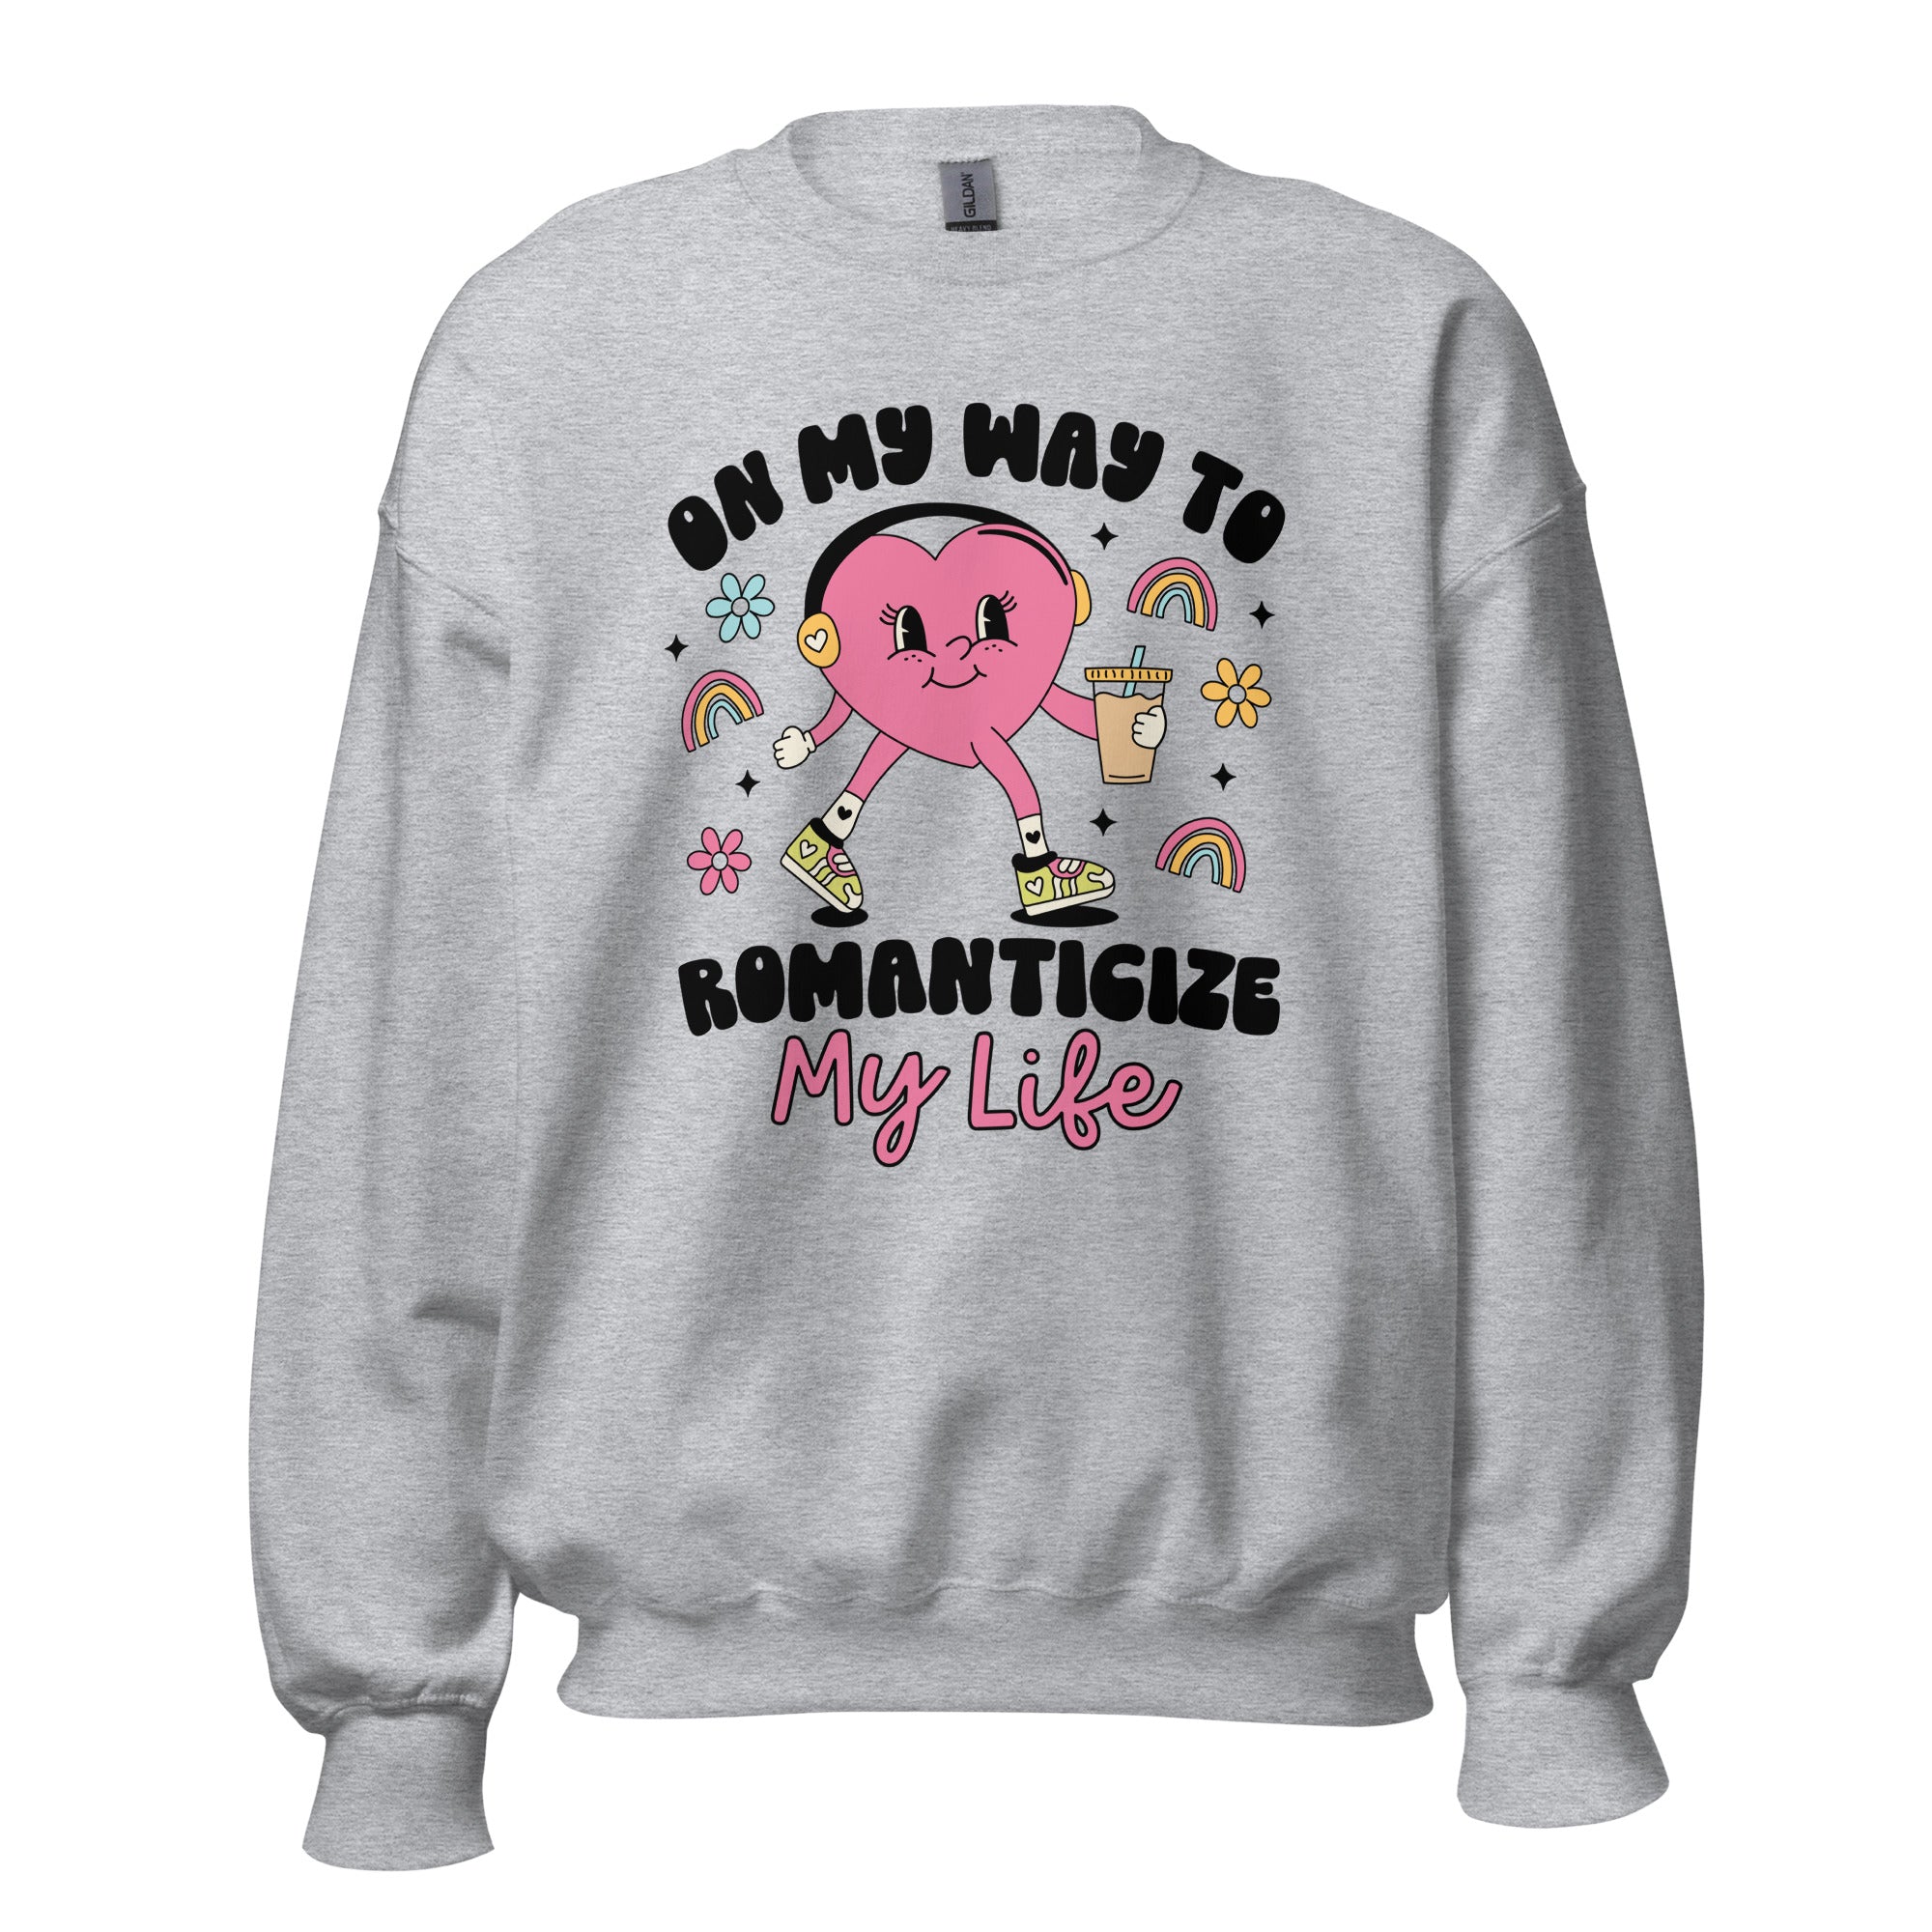 Romanticize Your Life Sweatshirt